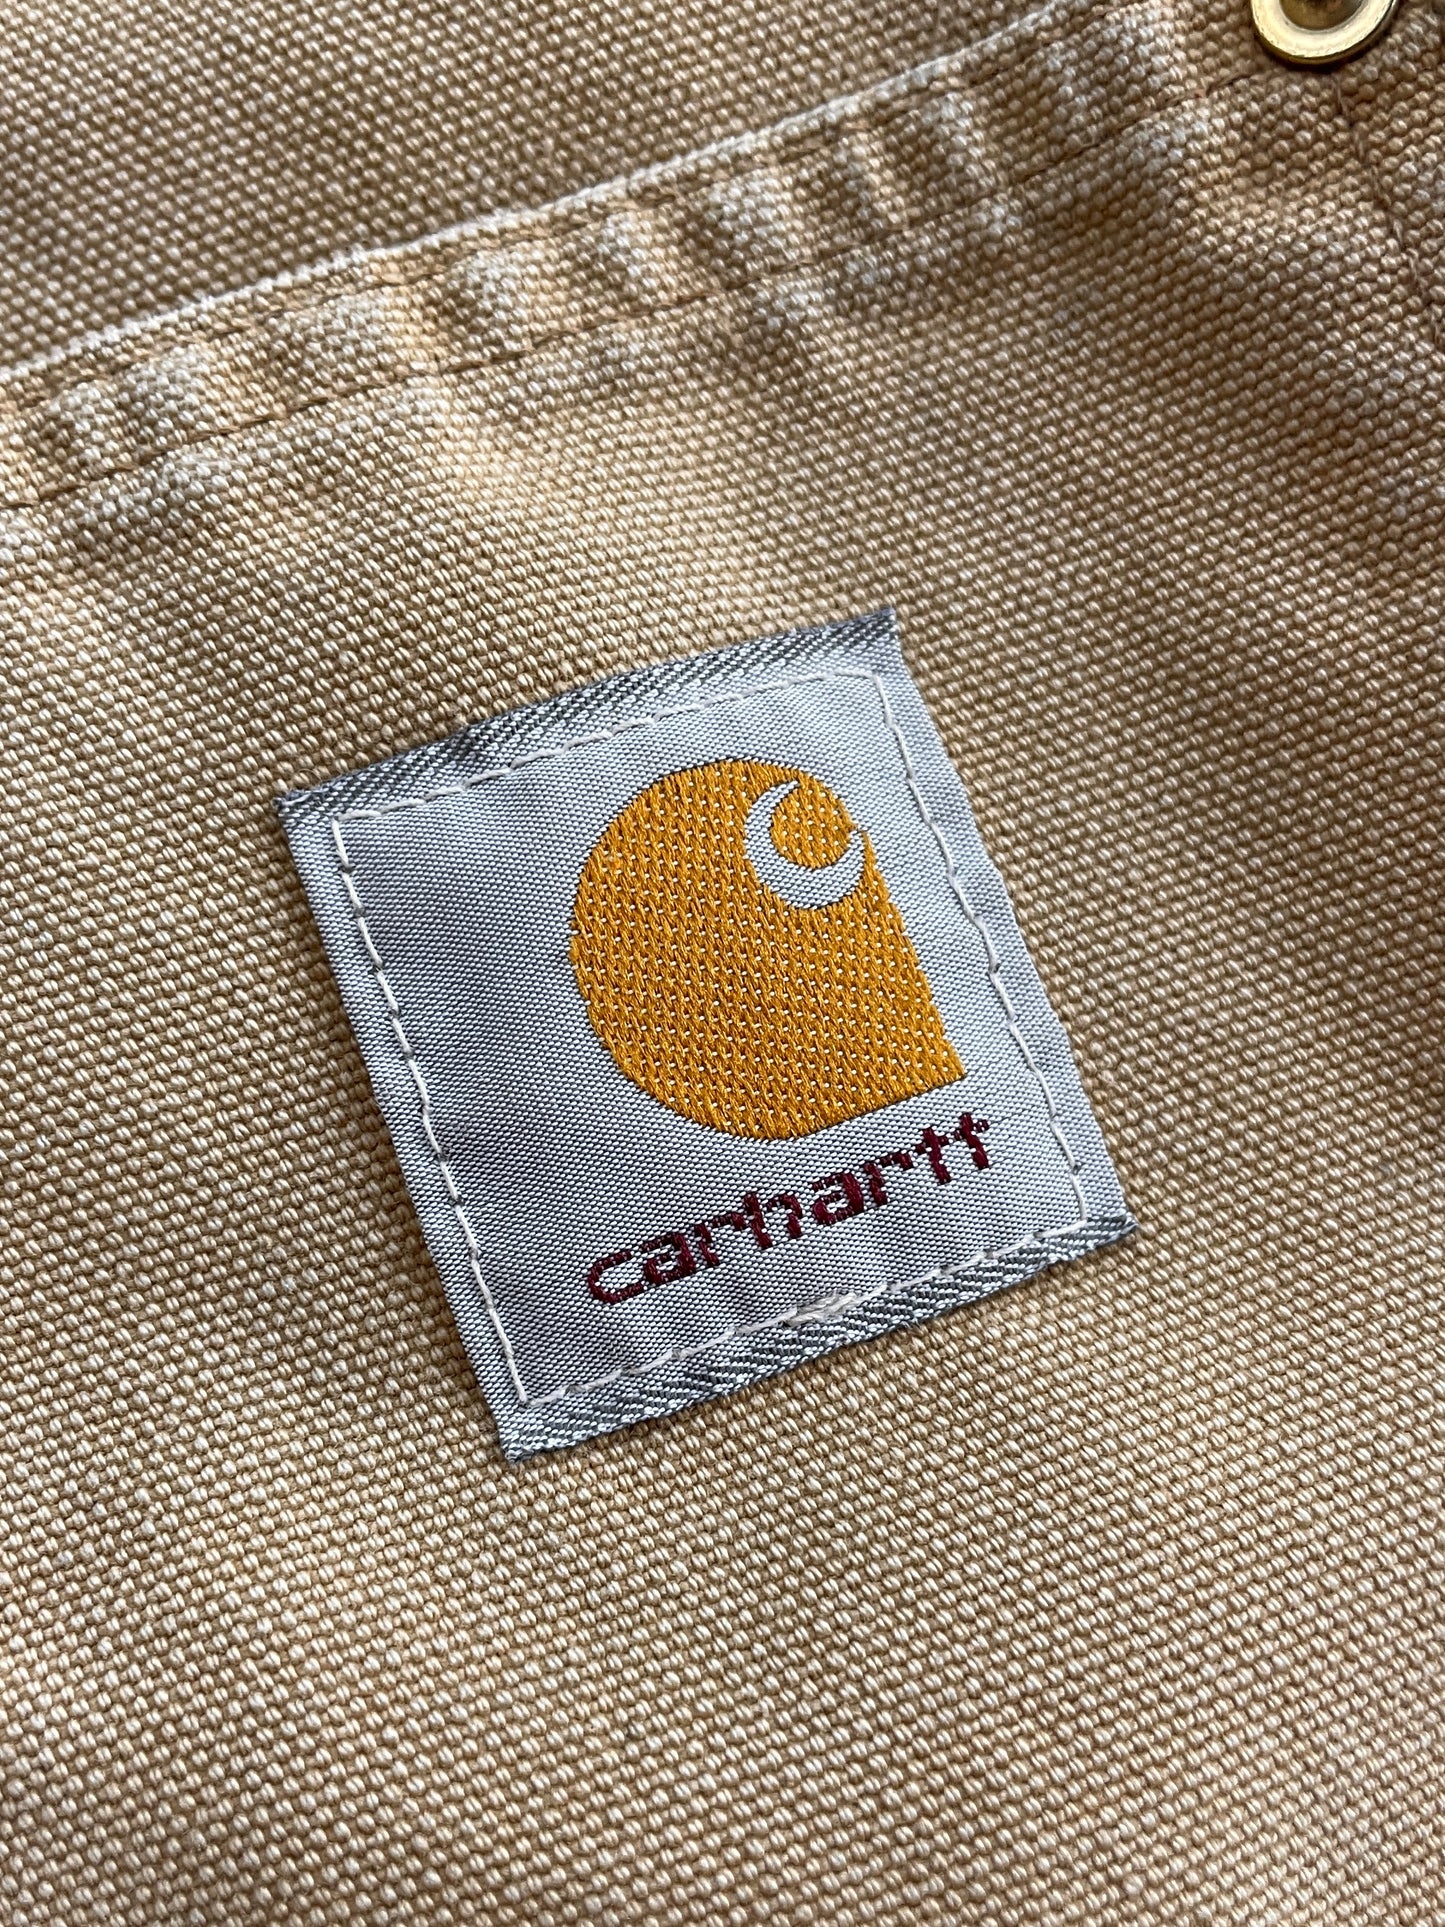 Made In USA Carhartt Jacket [XL]